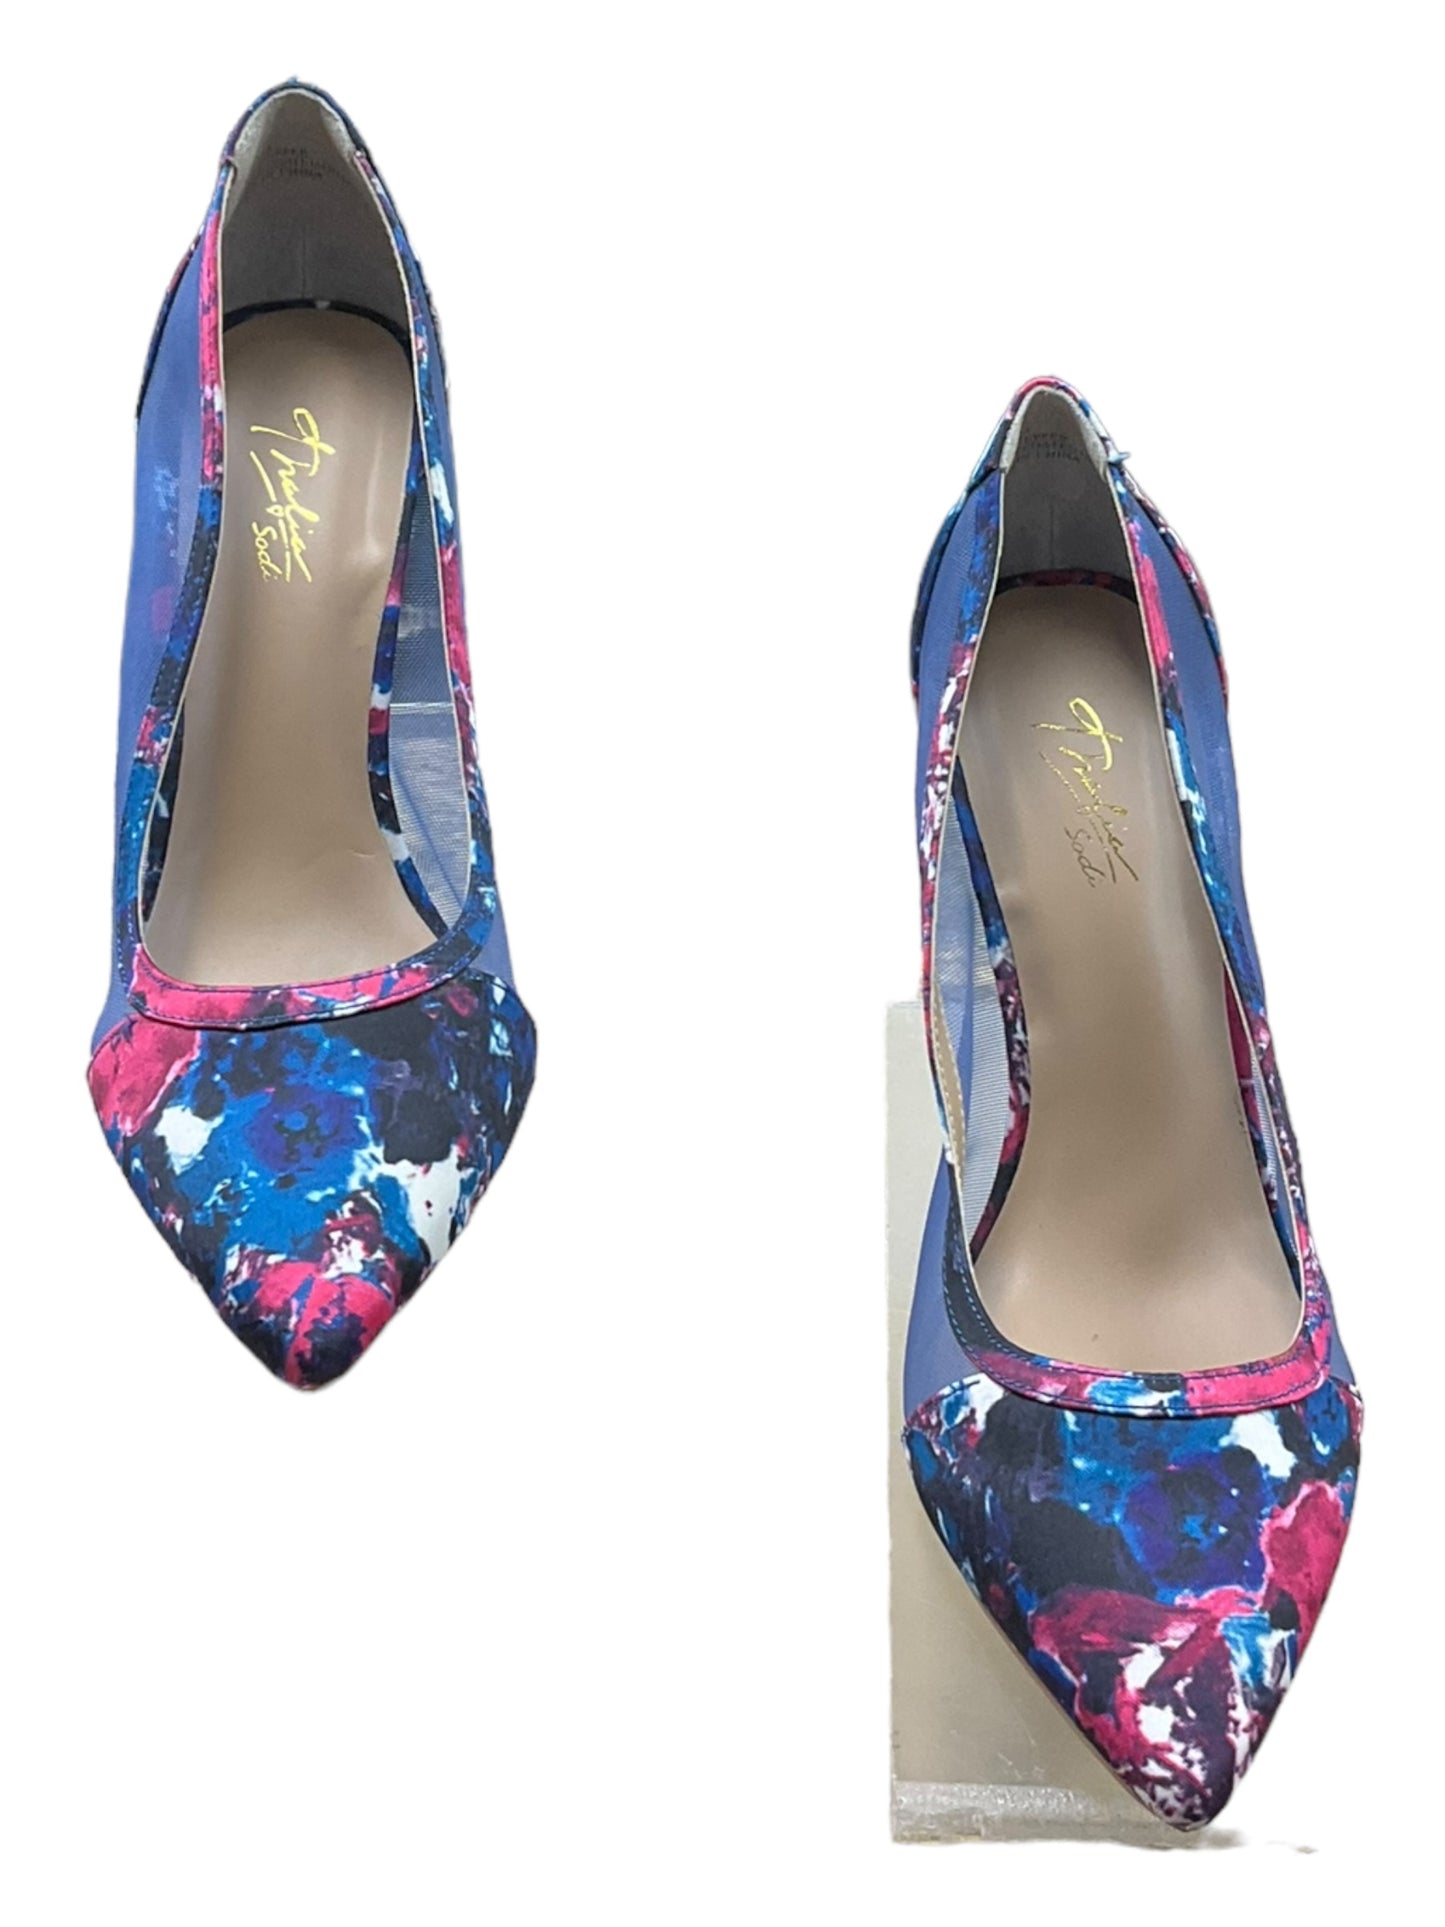 Shoes Heels Stiletto By Thalia Sodi  Size: 7